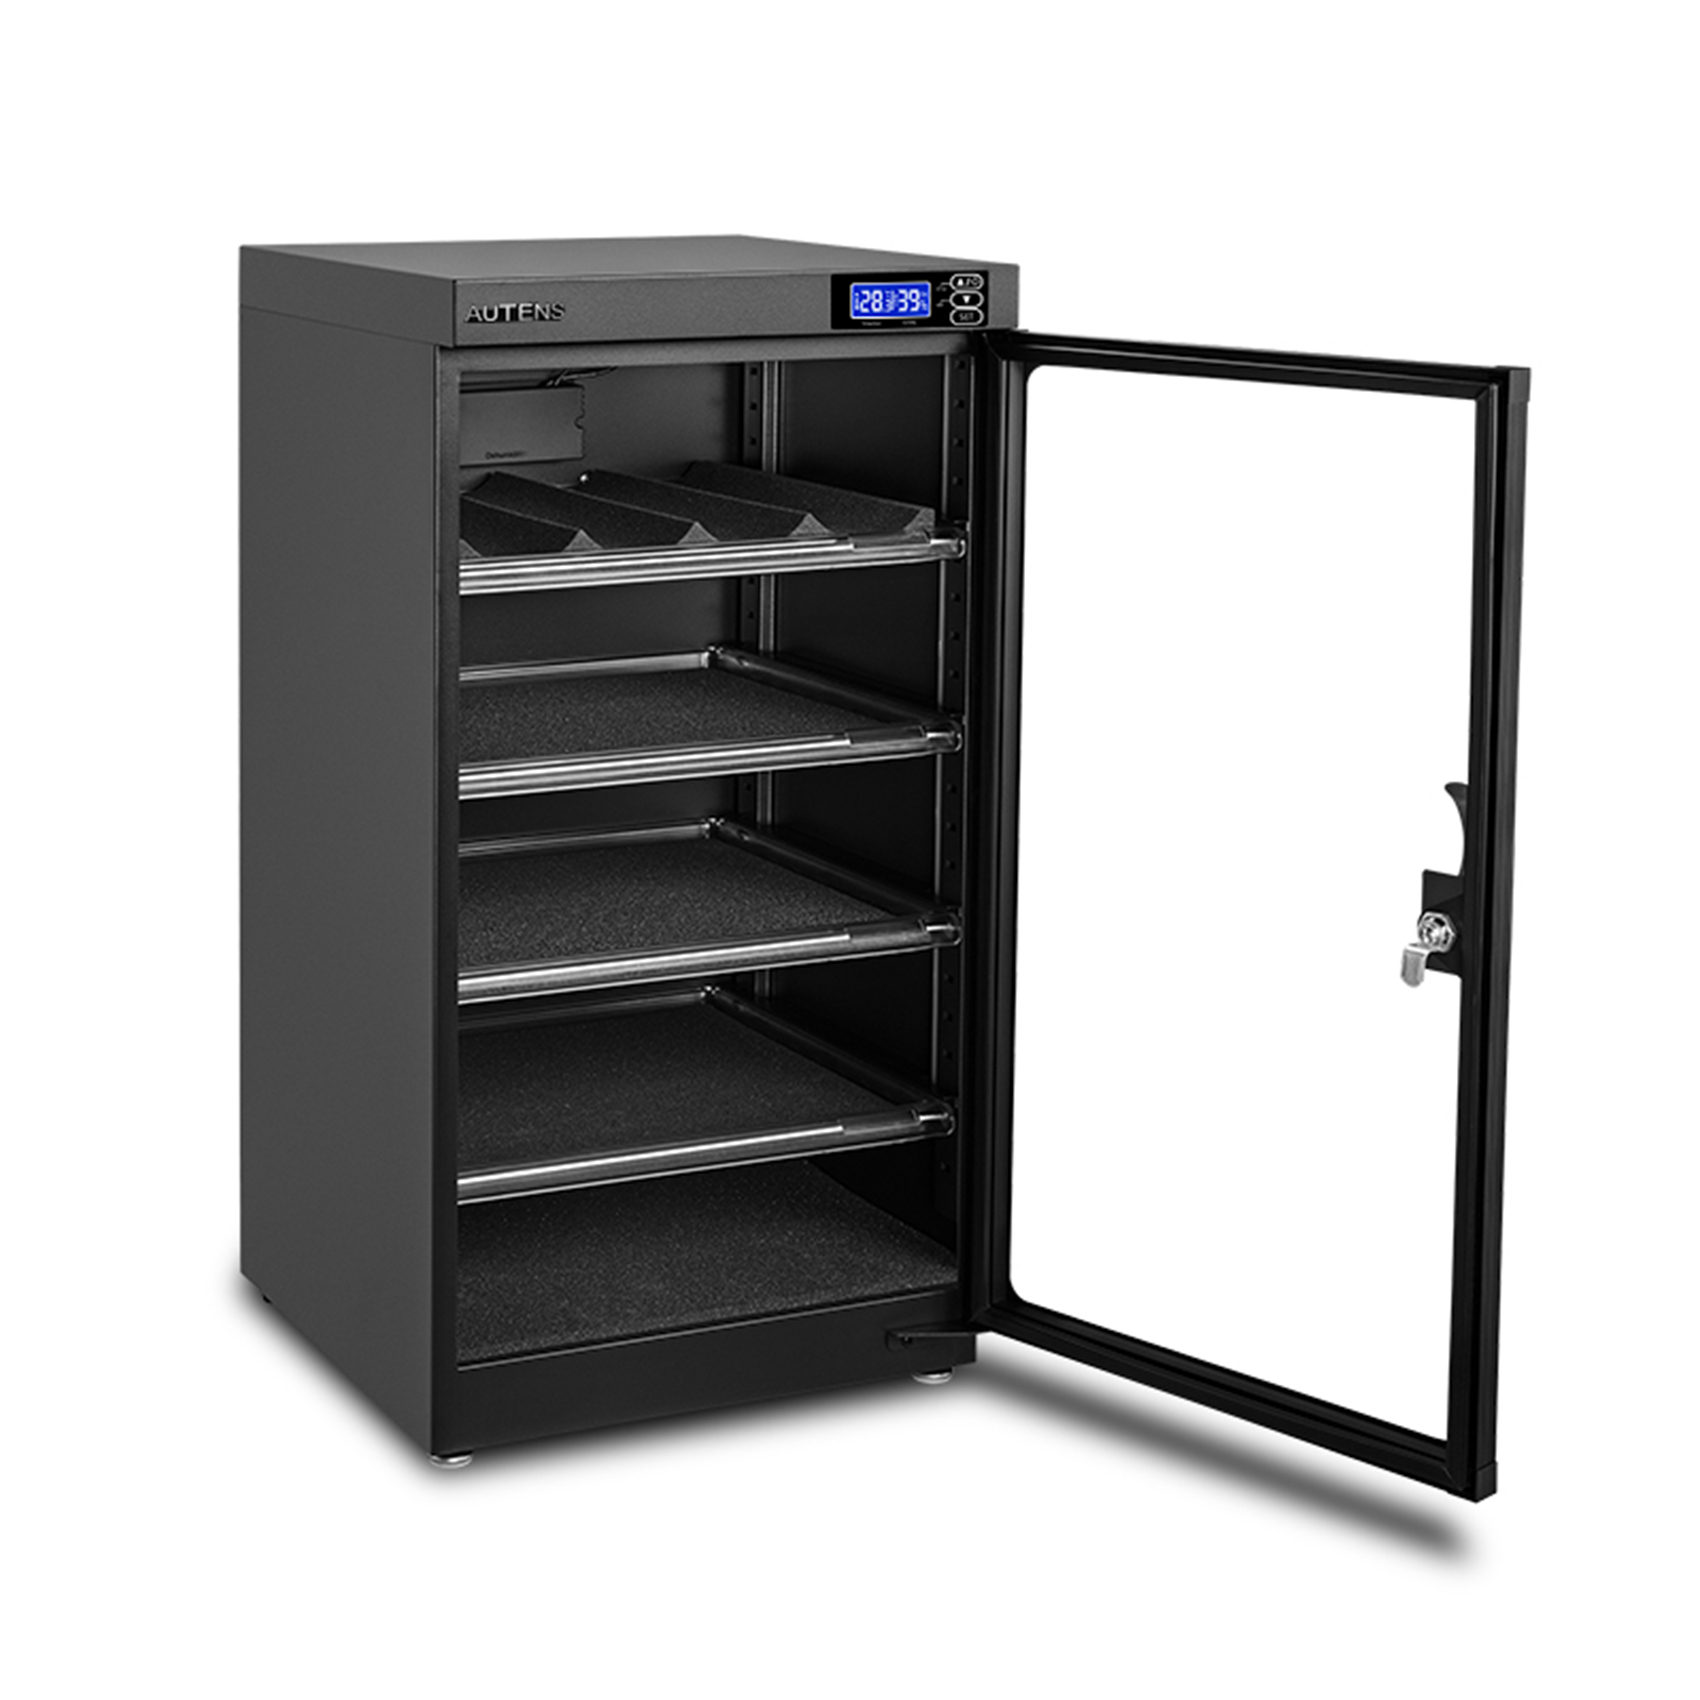 AUTENS 100L Dehumidifying Dry Cabinet Box, Digital Control Noiseless and Energy Saving, 5 Layers 8